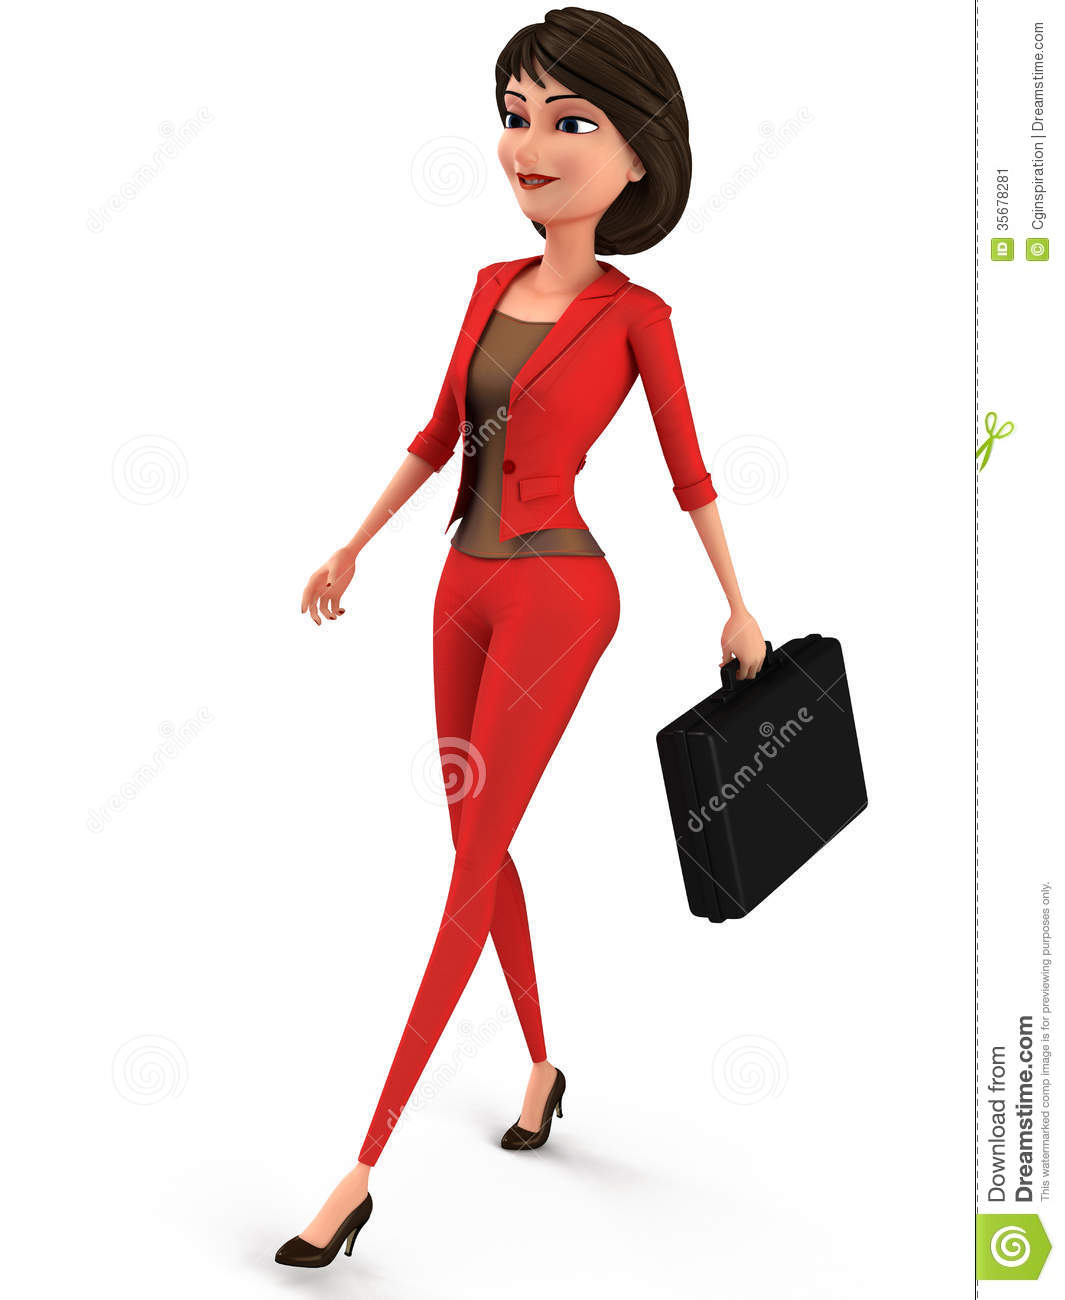 Ambition Business Woman Stock Image   Image  35678281